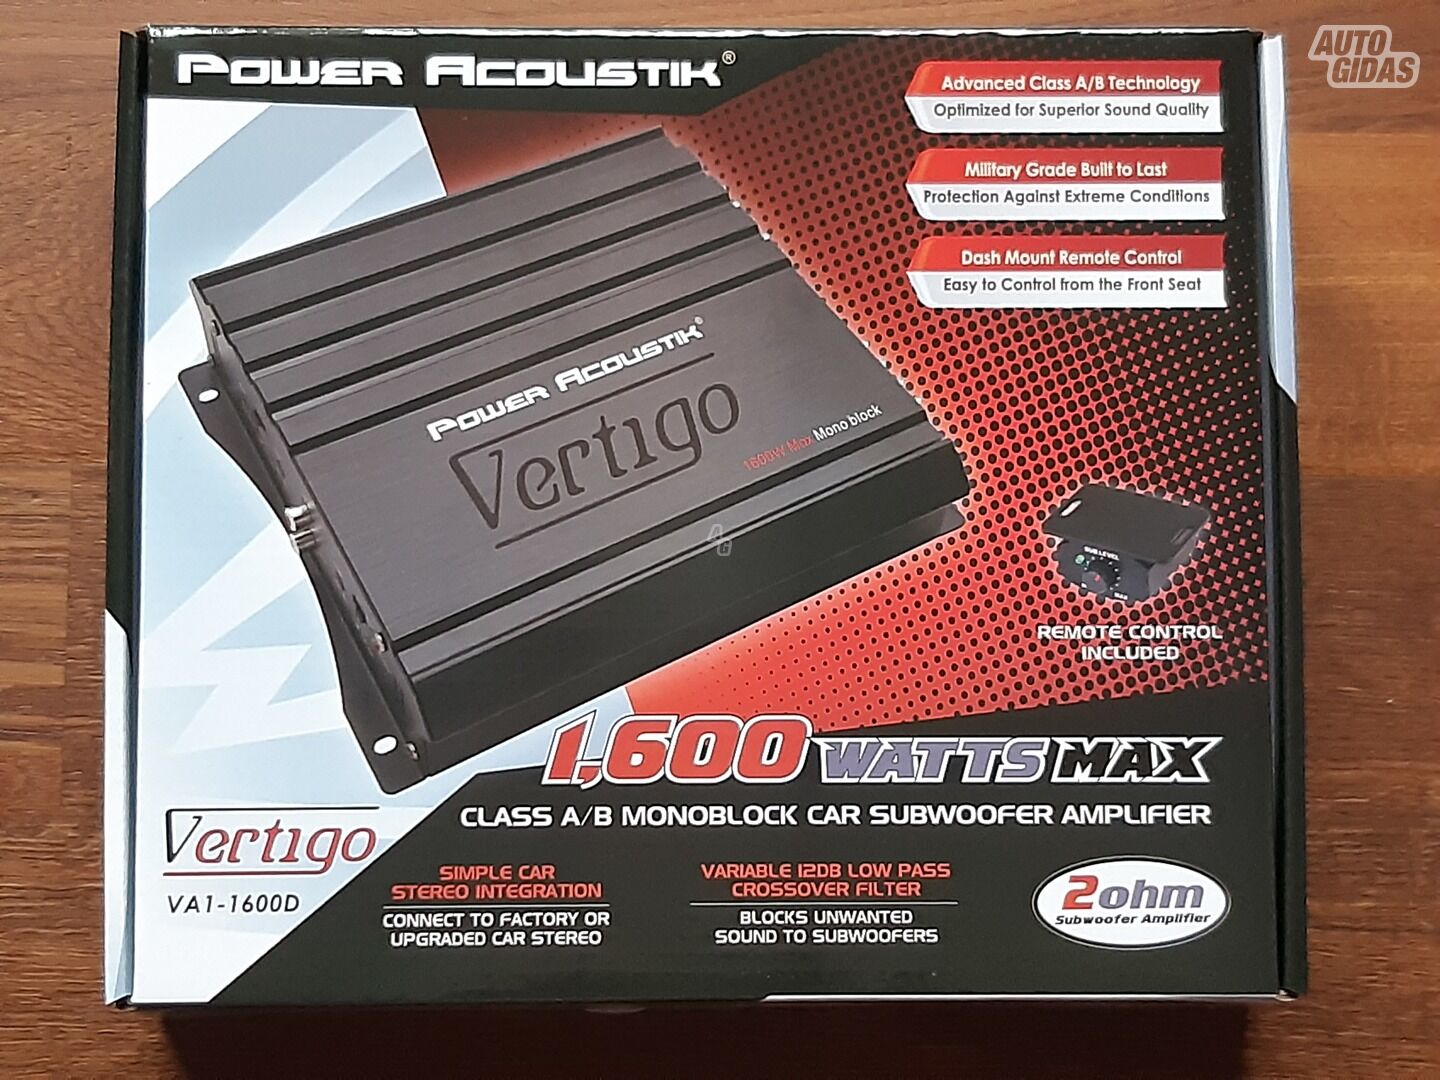 Power Acoustik Vertigo VA1-1600D Audio Amplifier